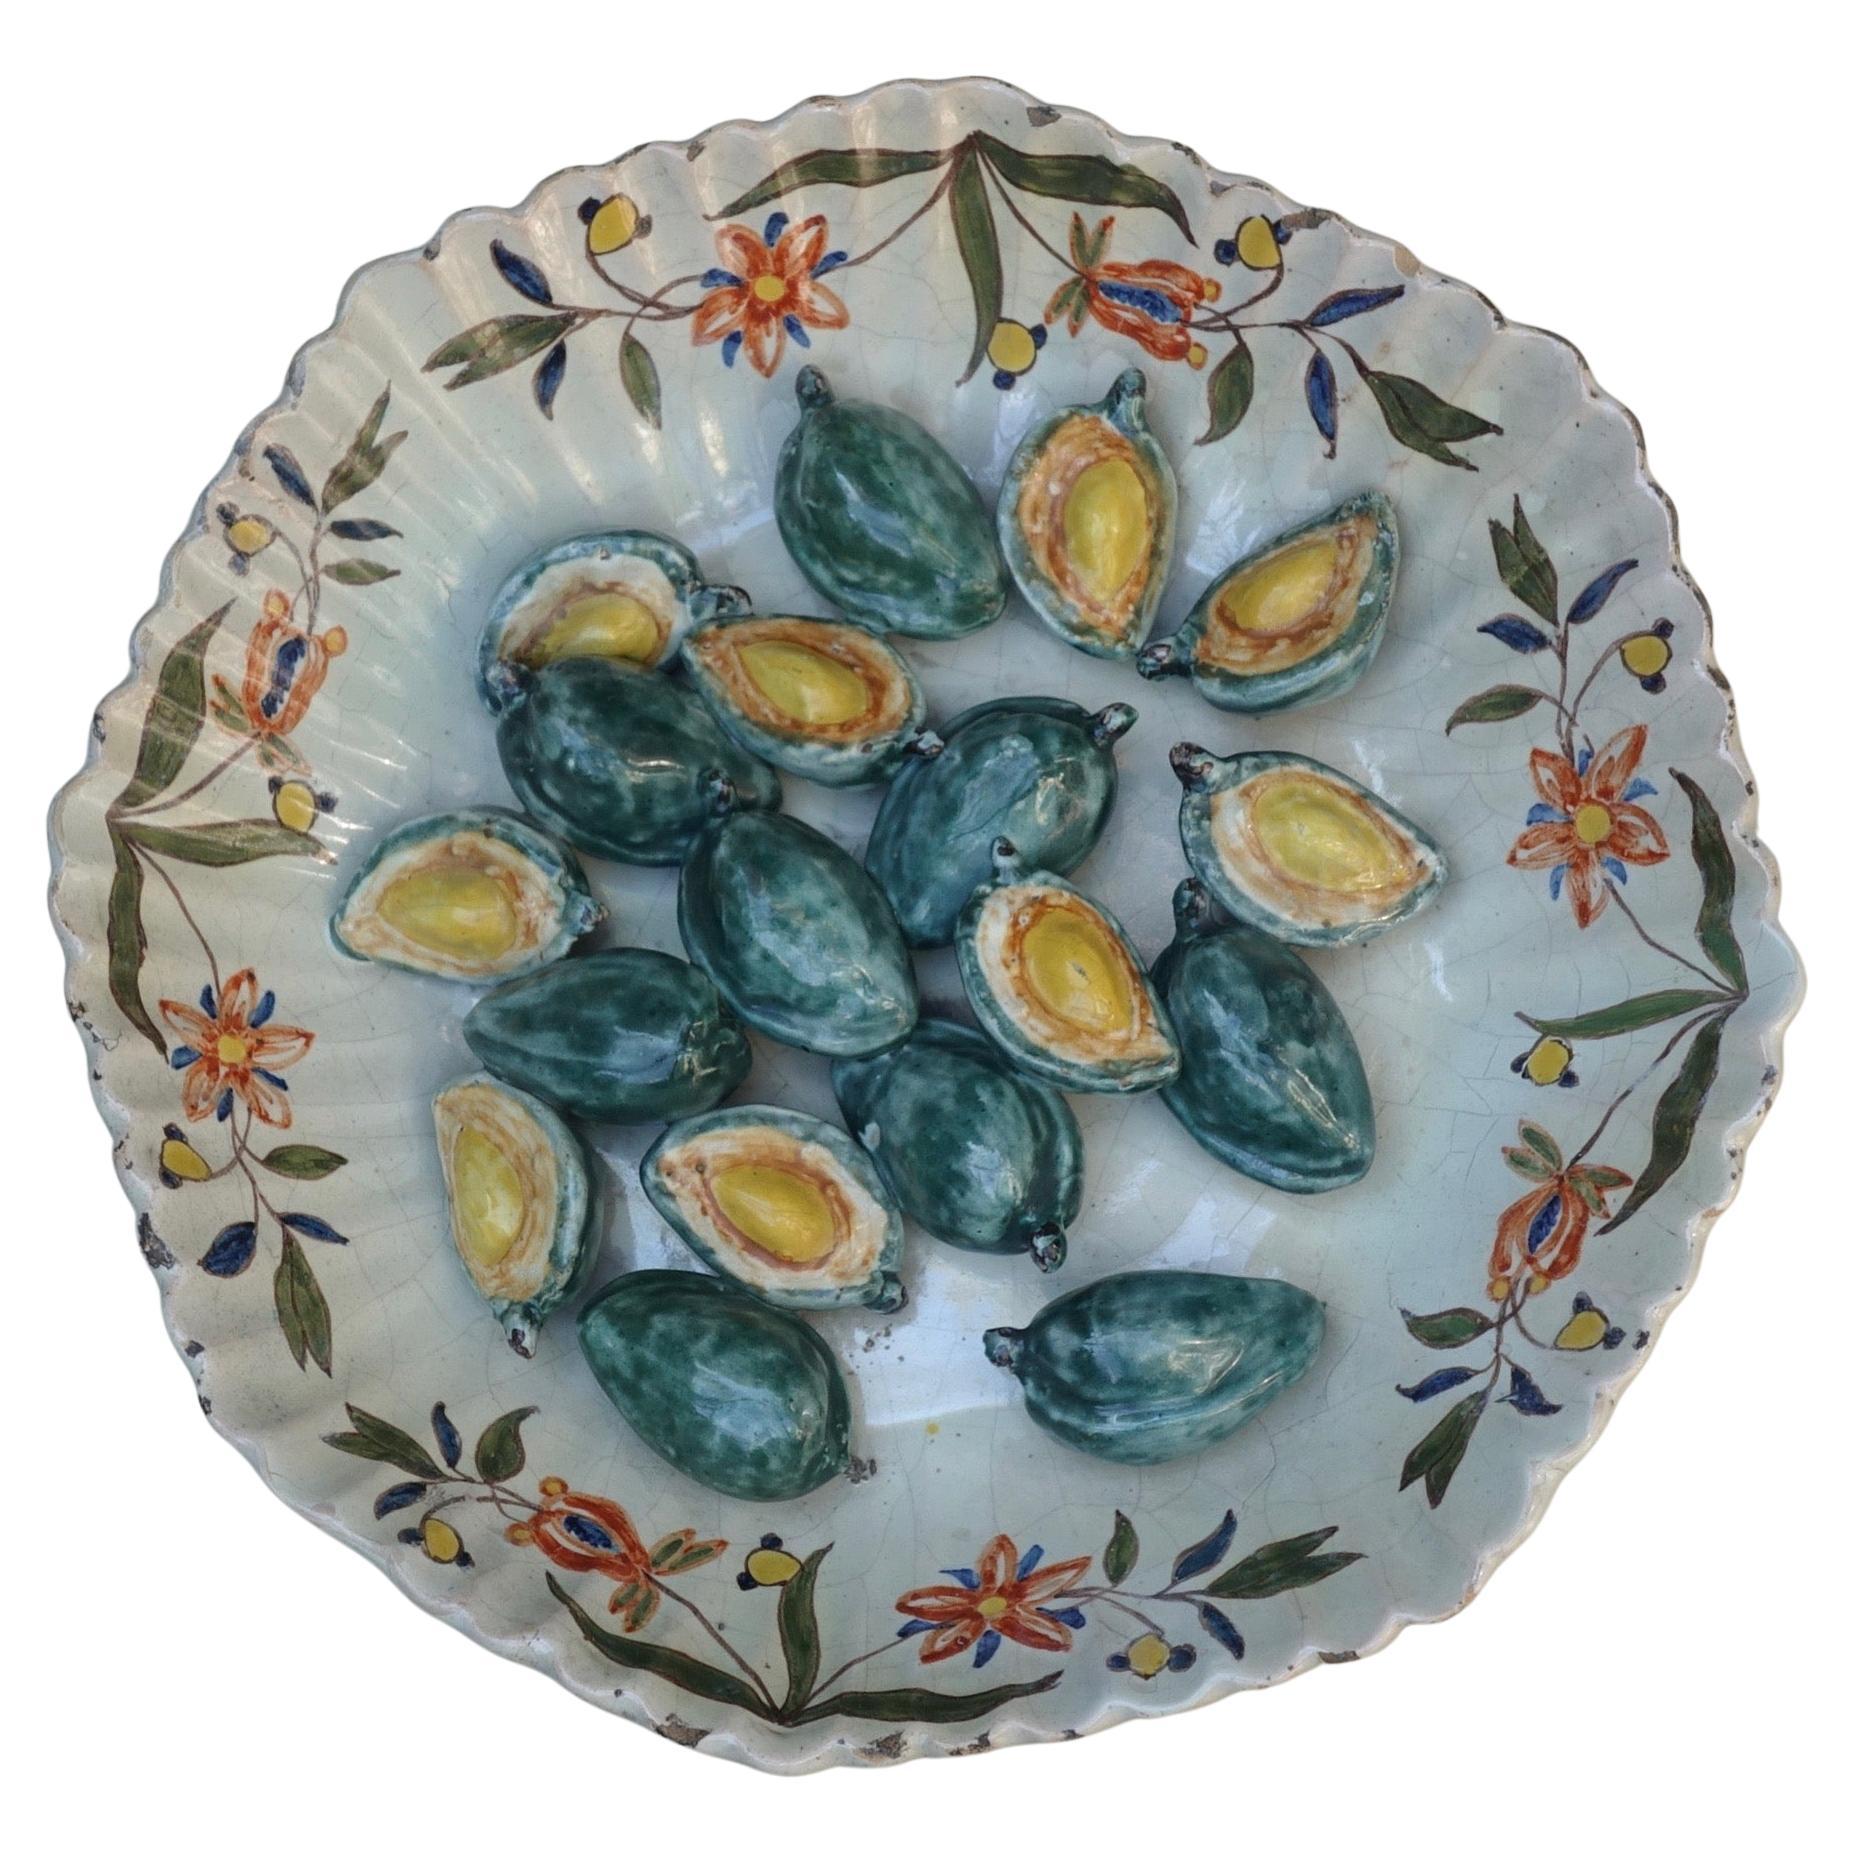 Trompe L’oeil Footed Dish, Faenza, 17th Century